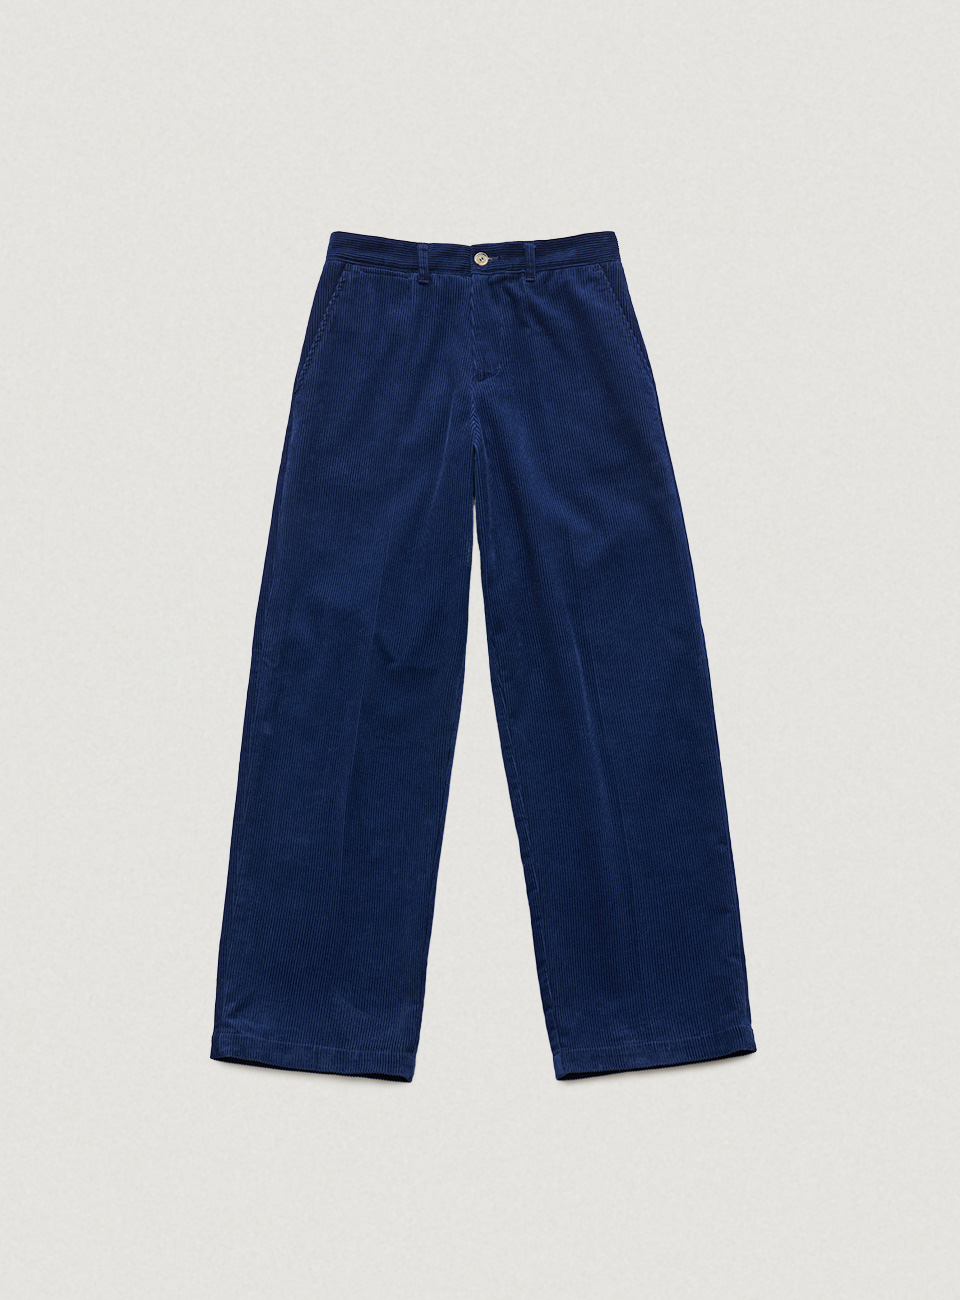 Blue Furrow Corduroy Pants